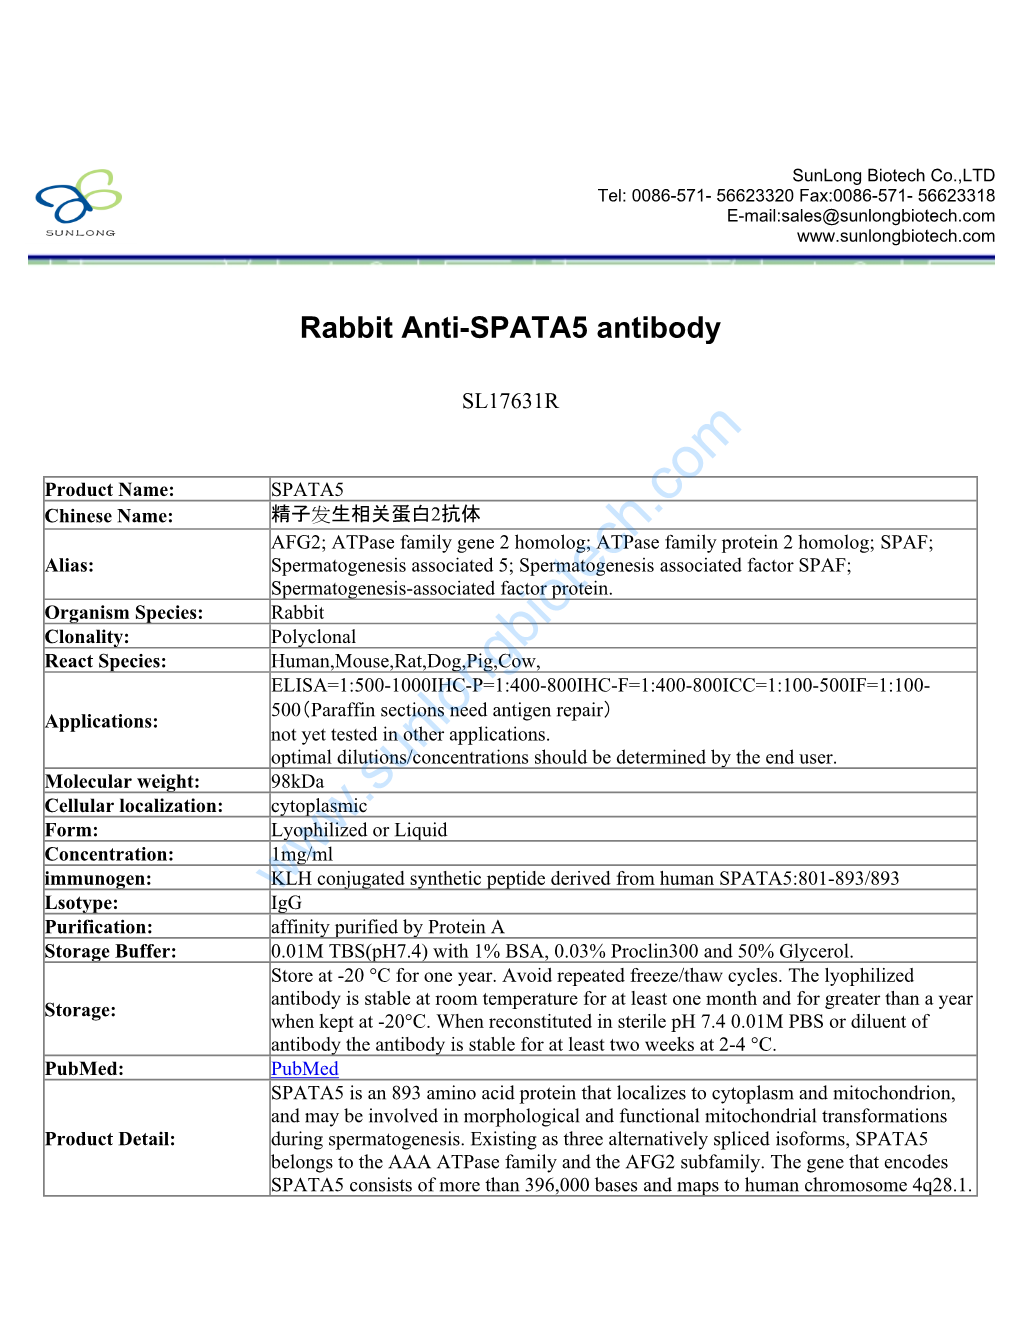 Rabbit Anti-SPATA5 Antibody-SL17631R